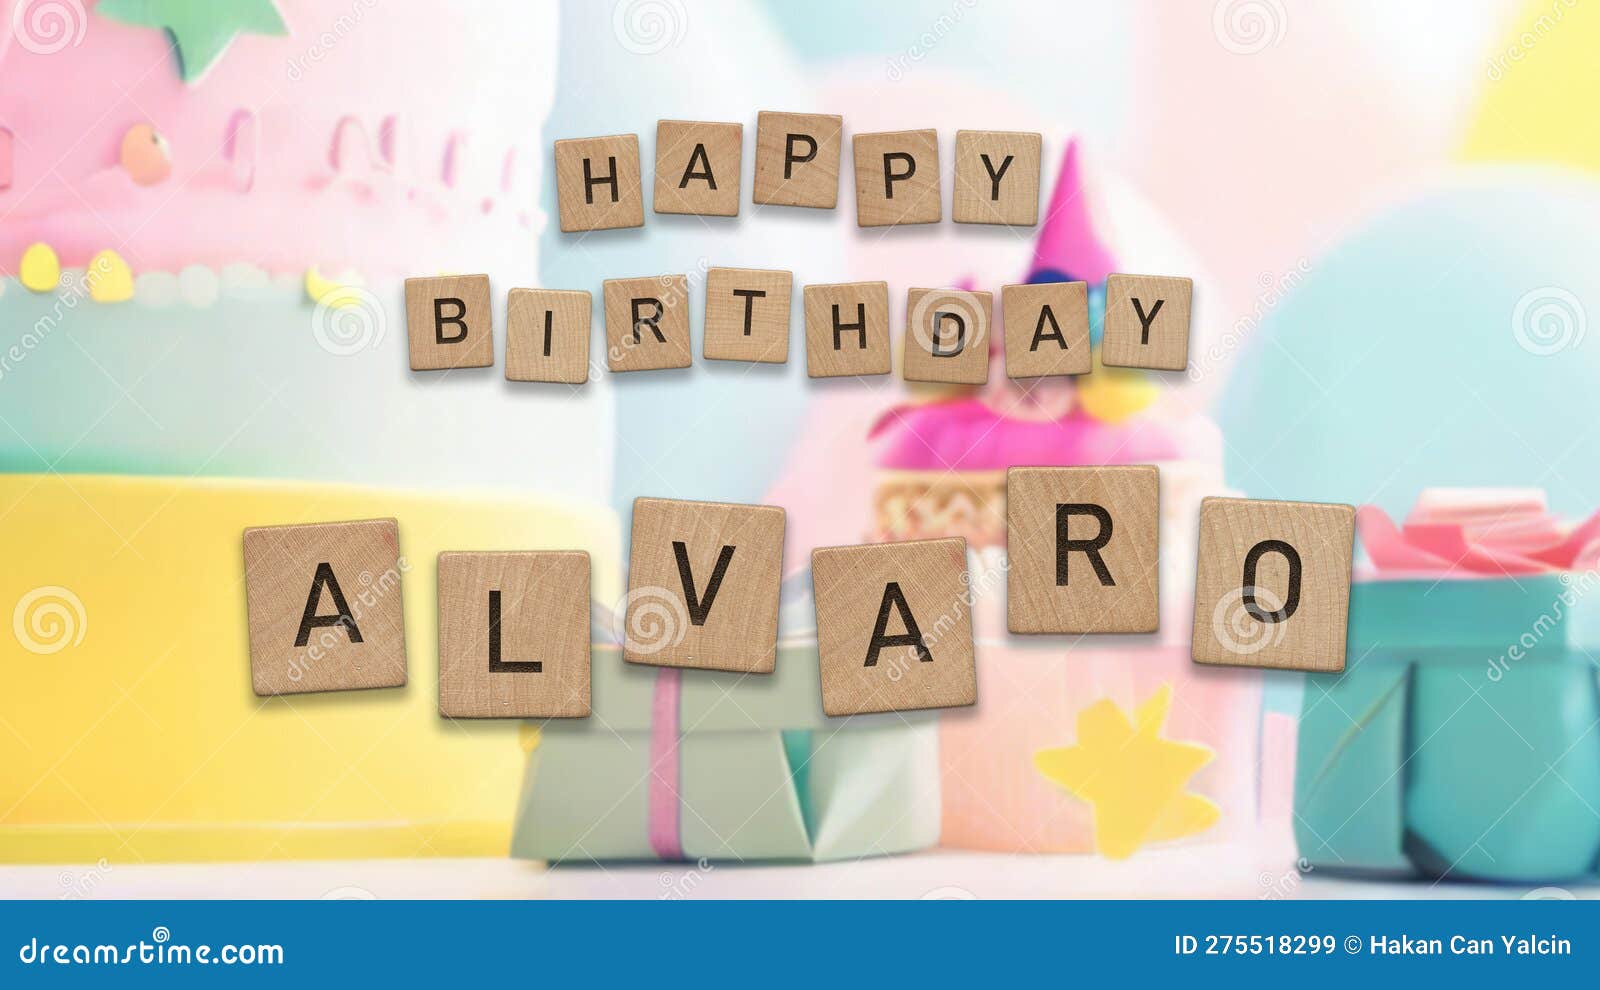 happy birthday card for a boy named alvaro